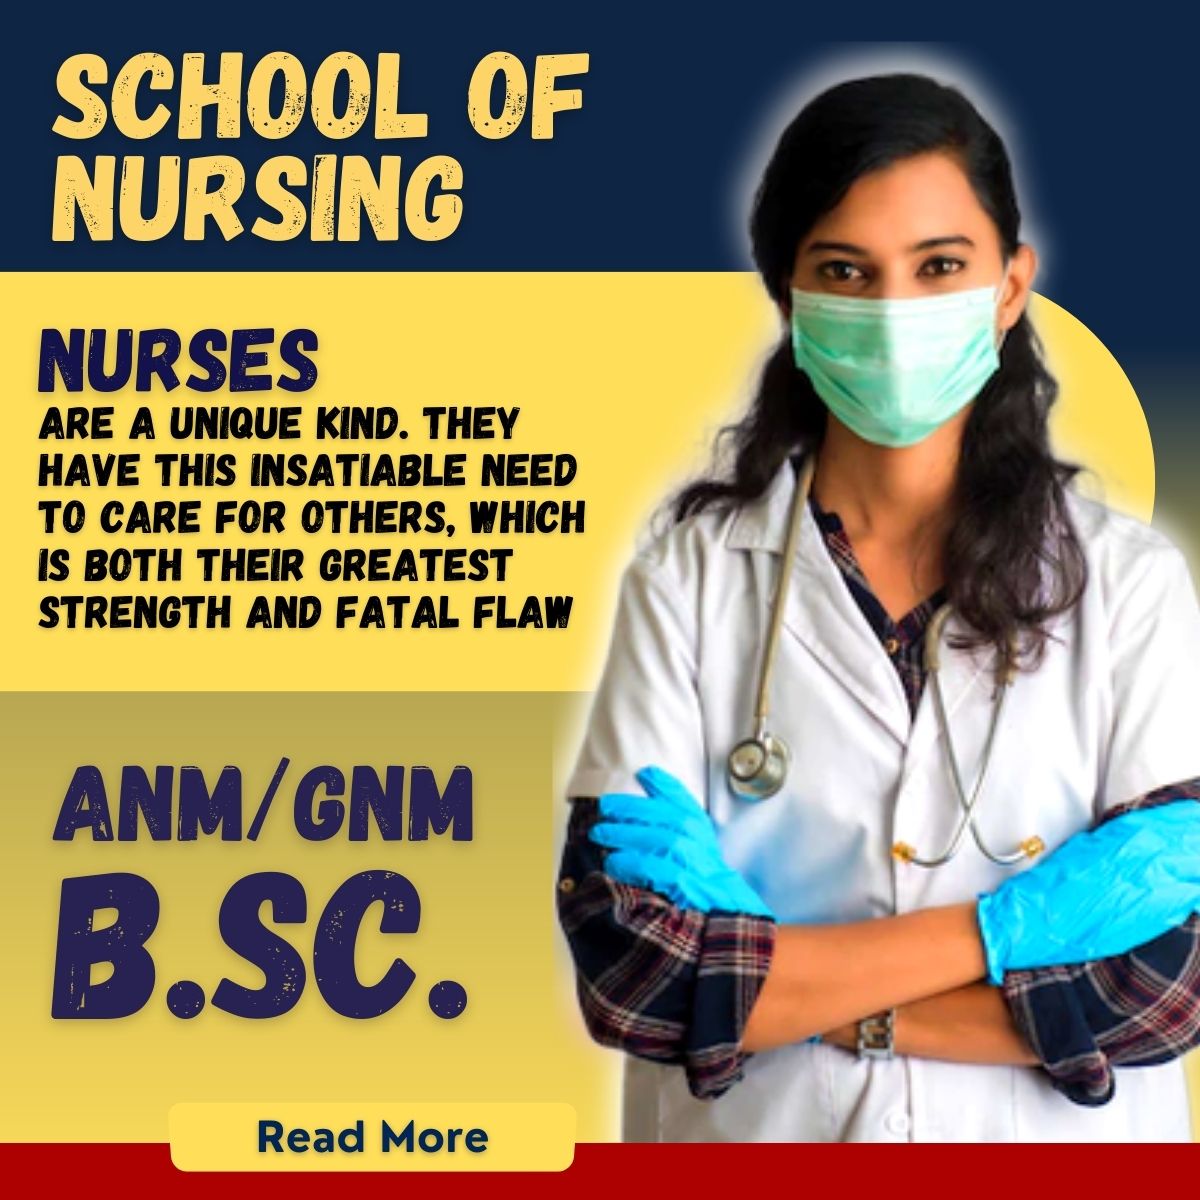 best/top bsc, msc, gnm, anm nursing colleges in up, delhi ncr, lucknow, meerut